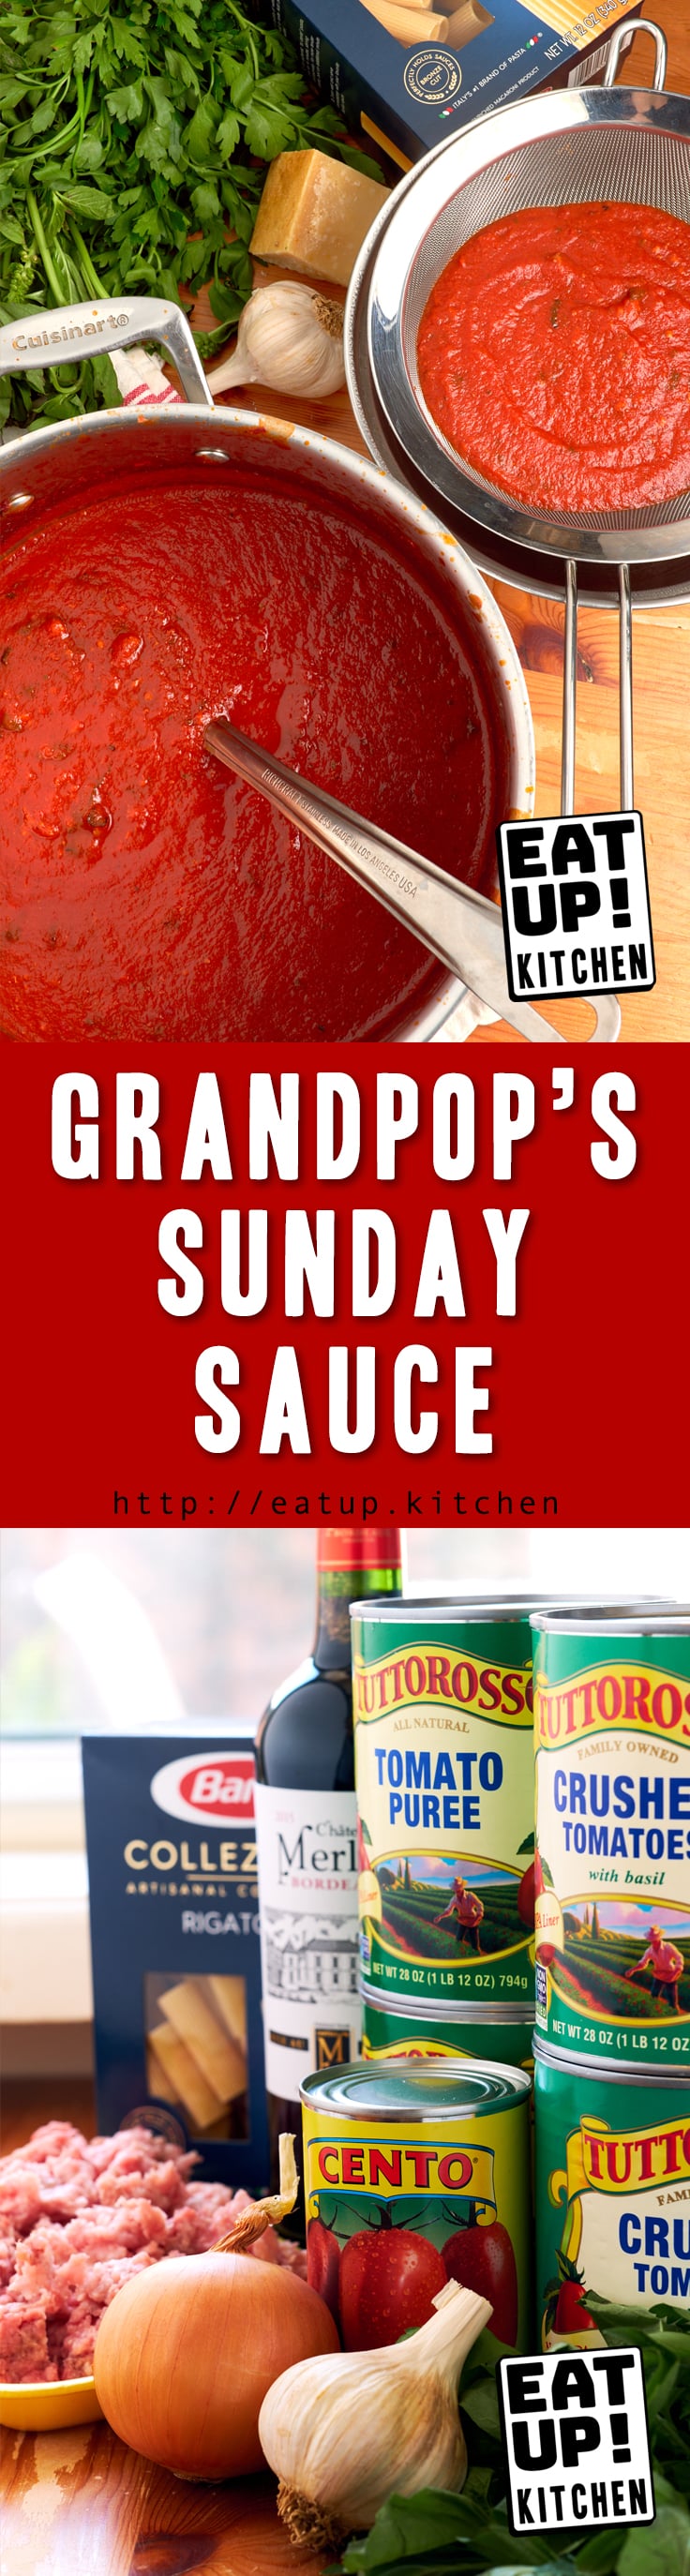 Grandpop's Sunday Sauce